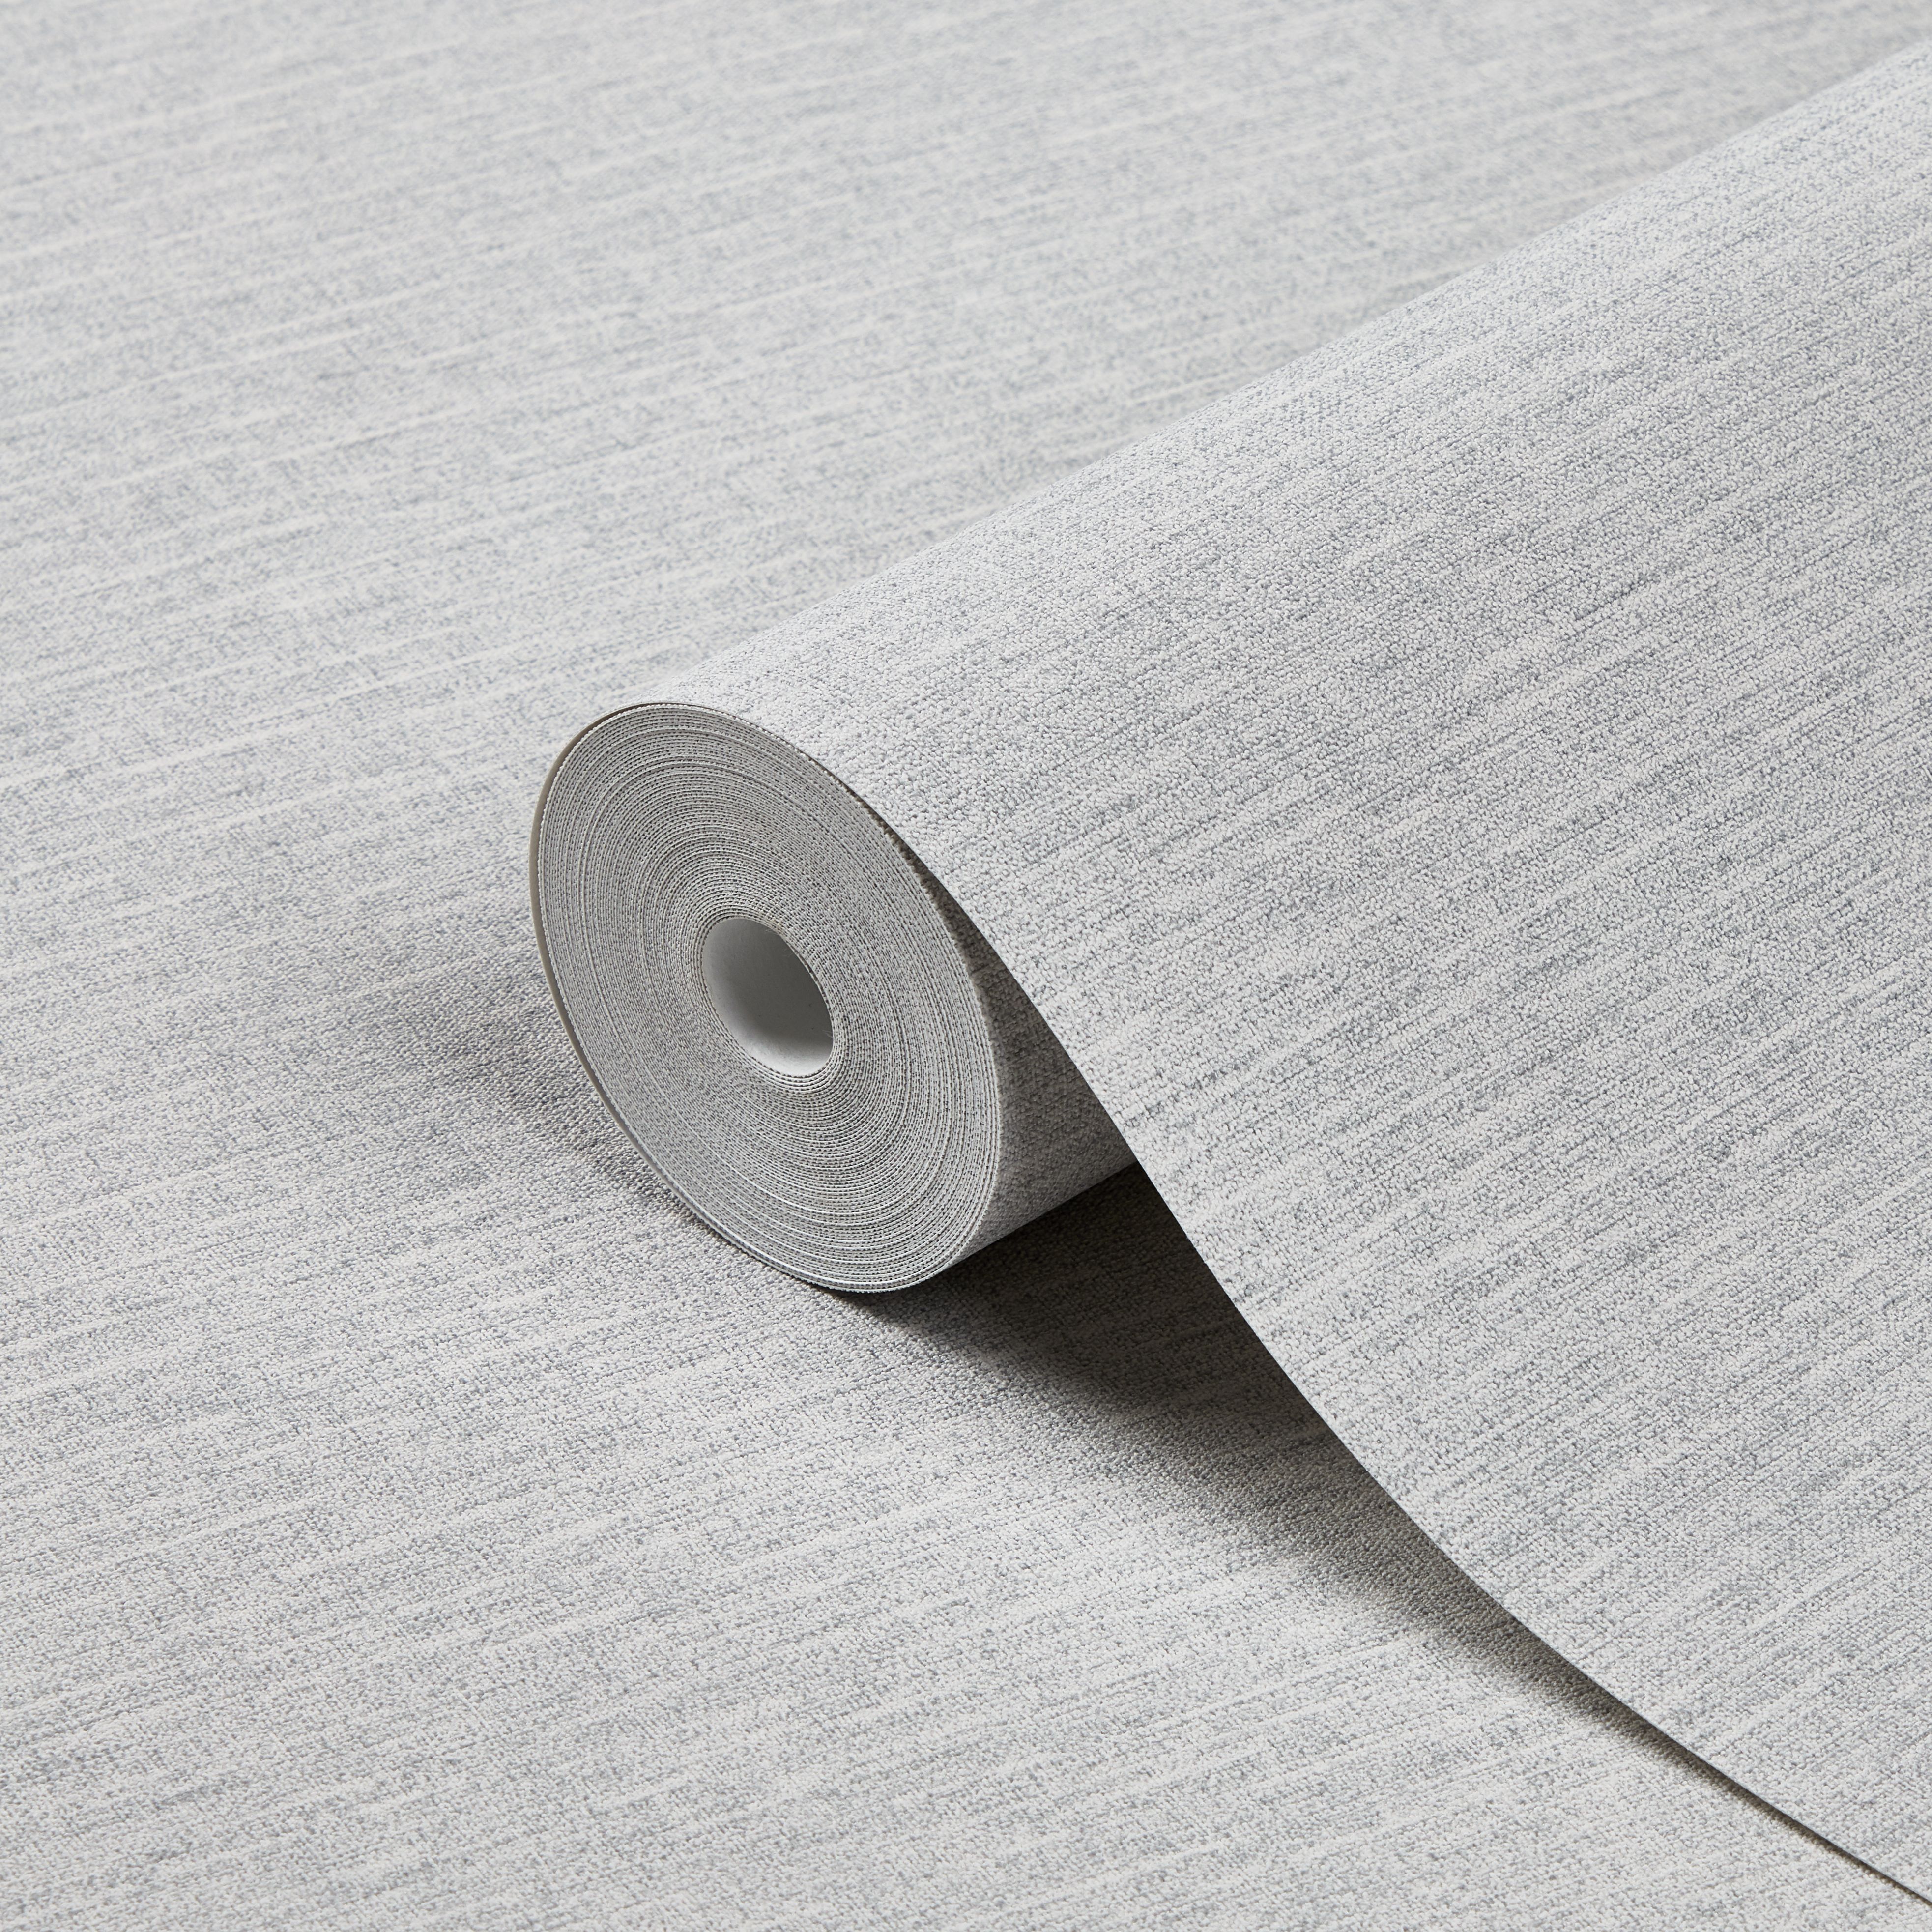 GoodHome Arceau Grey Fabric effect Textured Wallpaper Sample